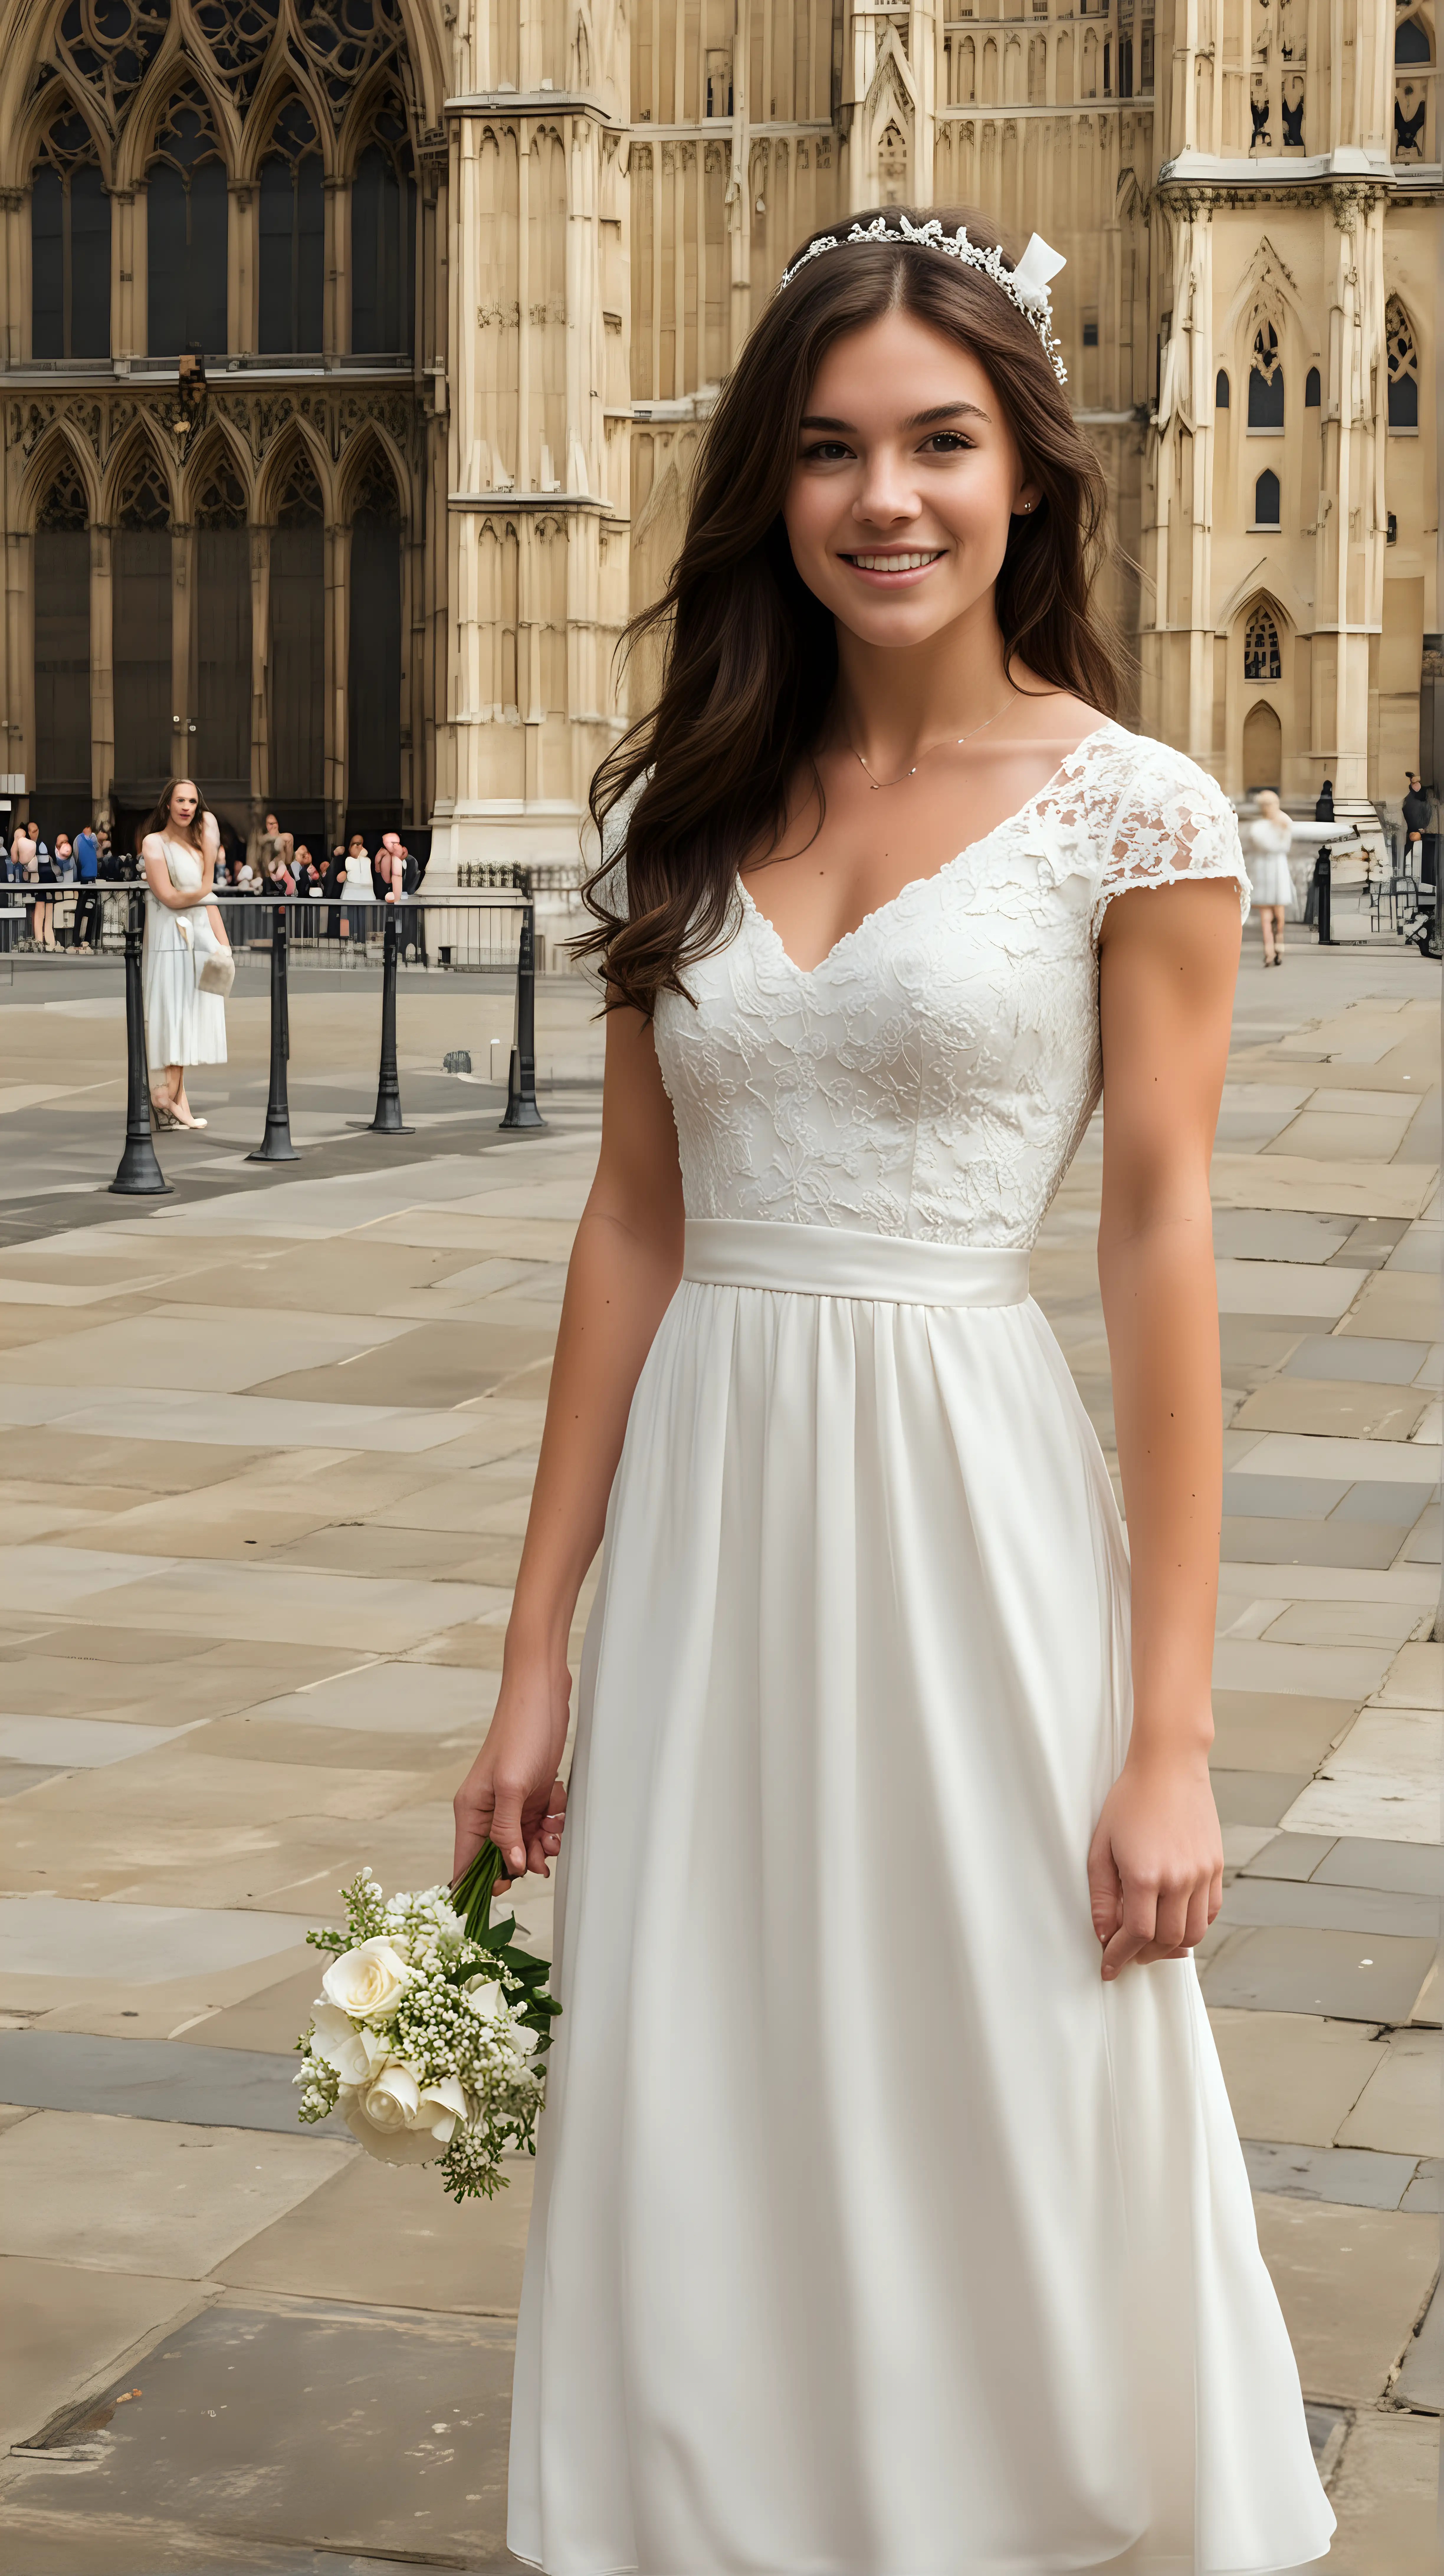 Teenage Bridesmaid Jordan Claire Robbins at Westminster Abbey